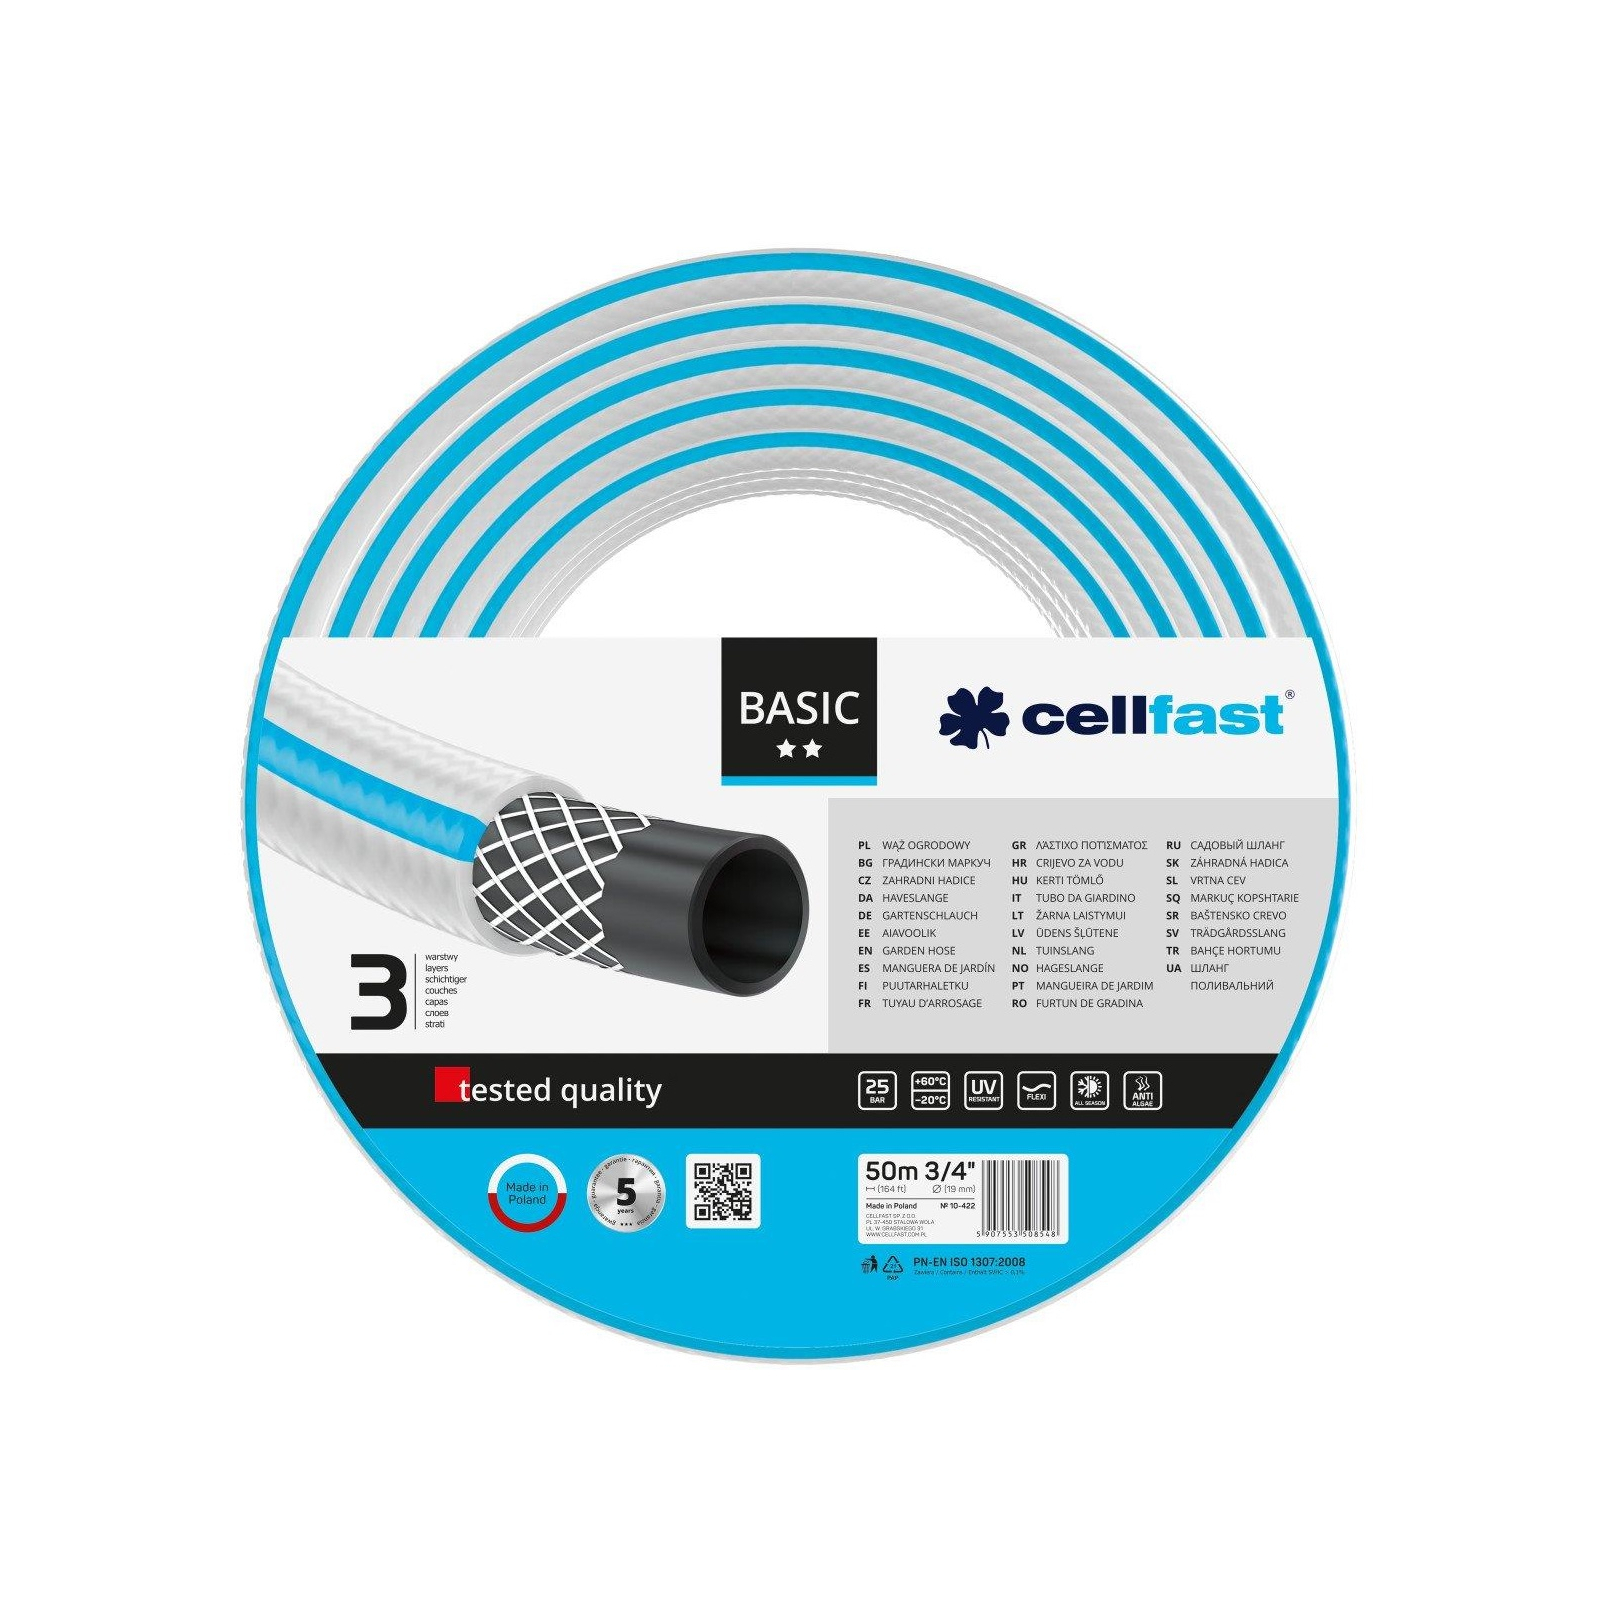 Поливочный шланг Cellfast BASIC, 3/4', 20м, 3 слоя, до 25 Бар, -20…+60°C (10-420)